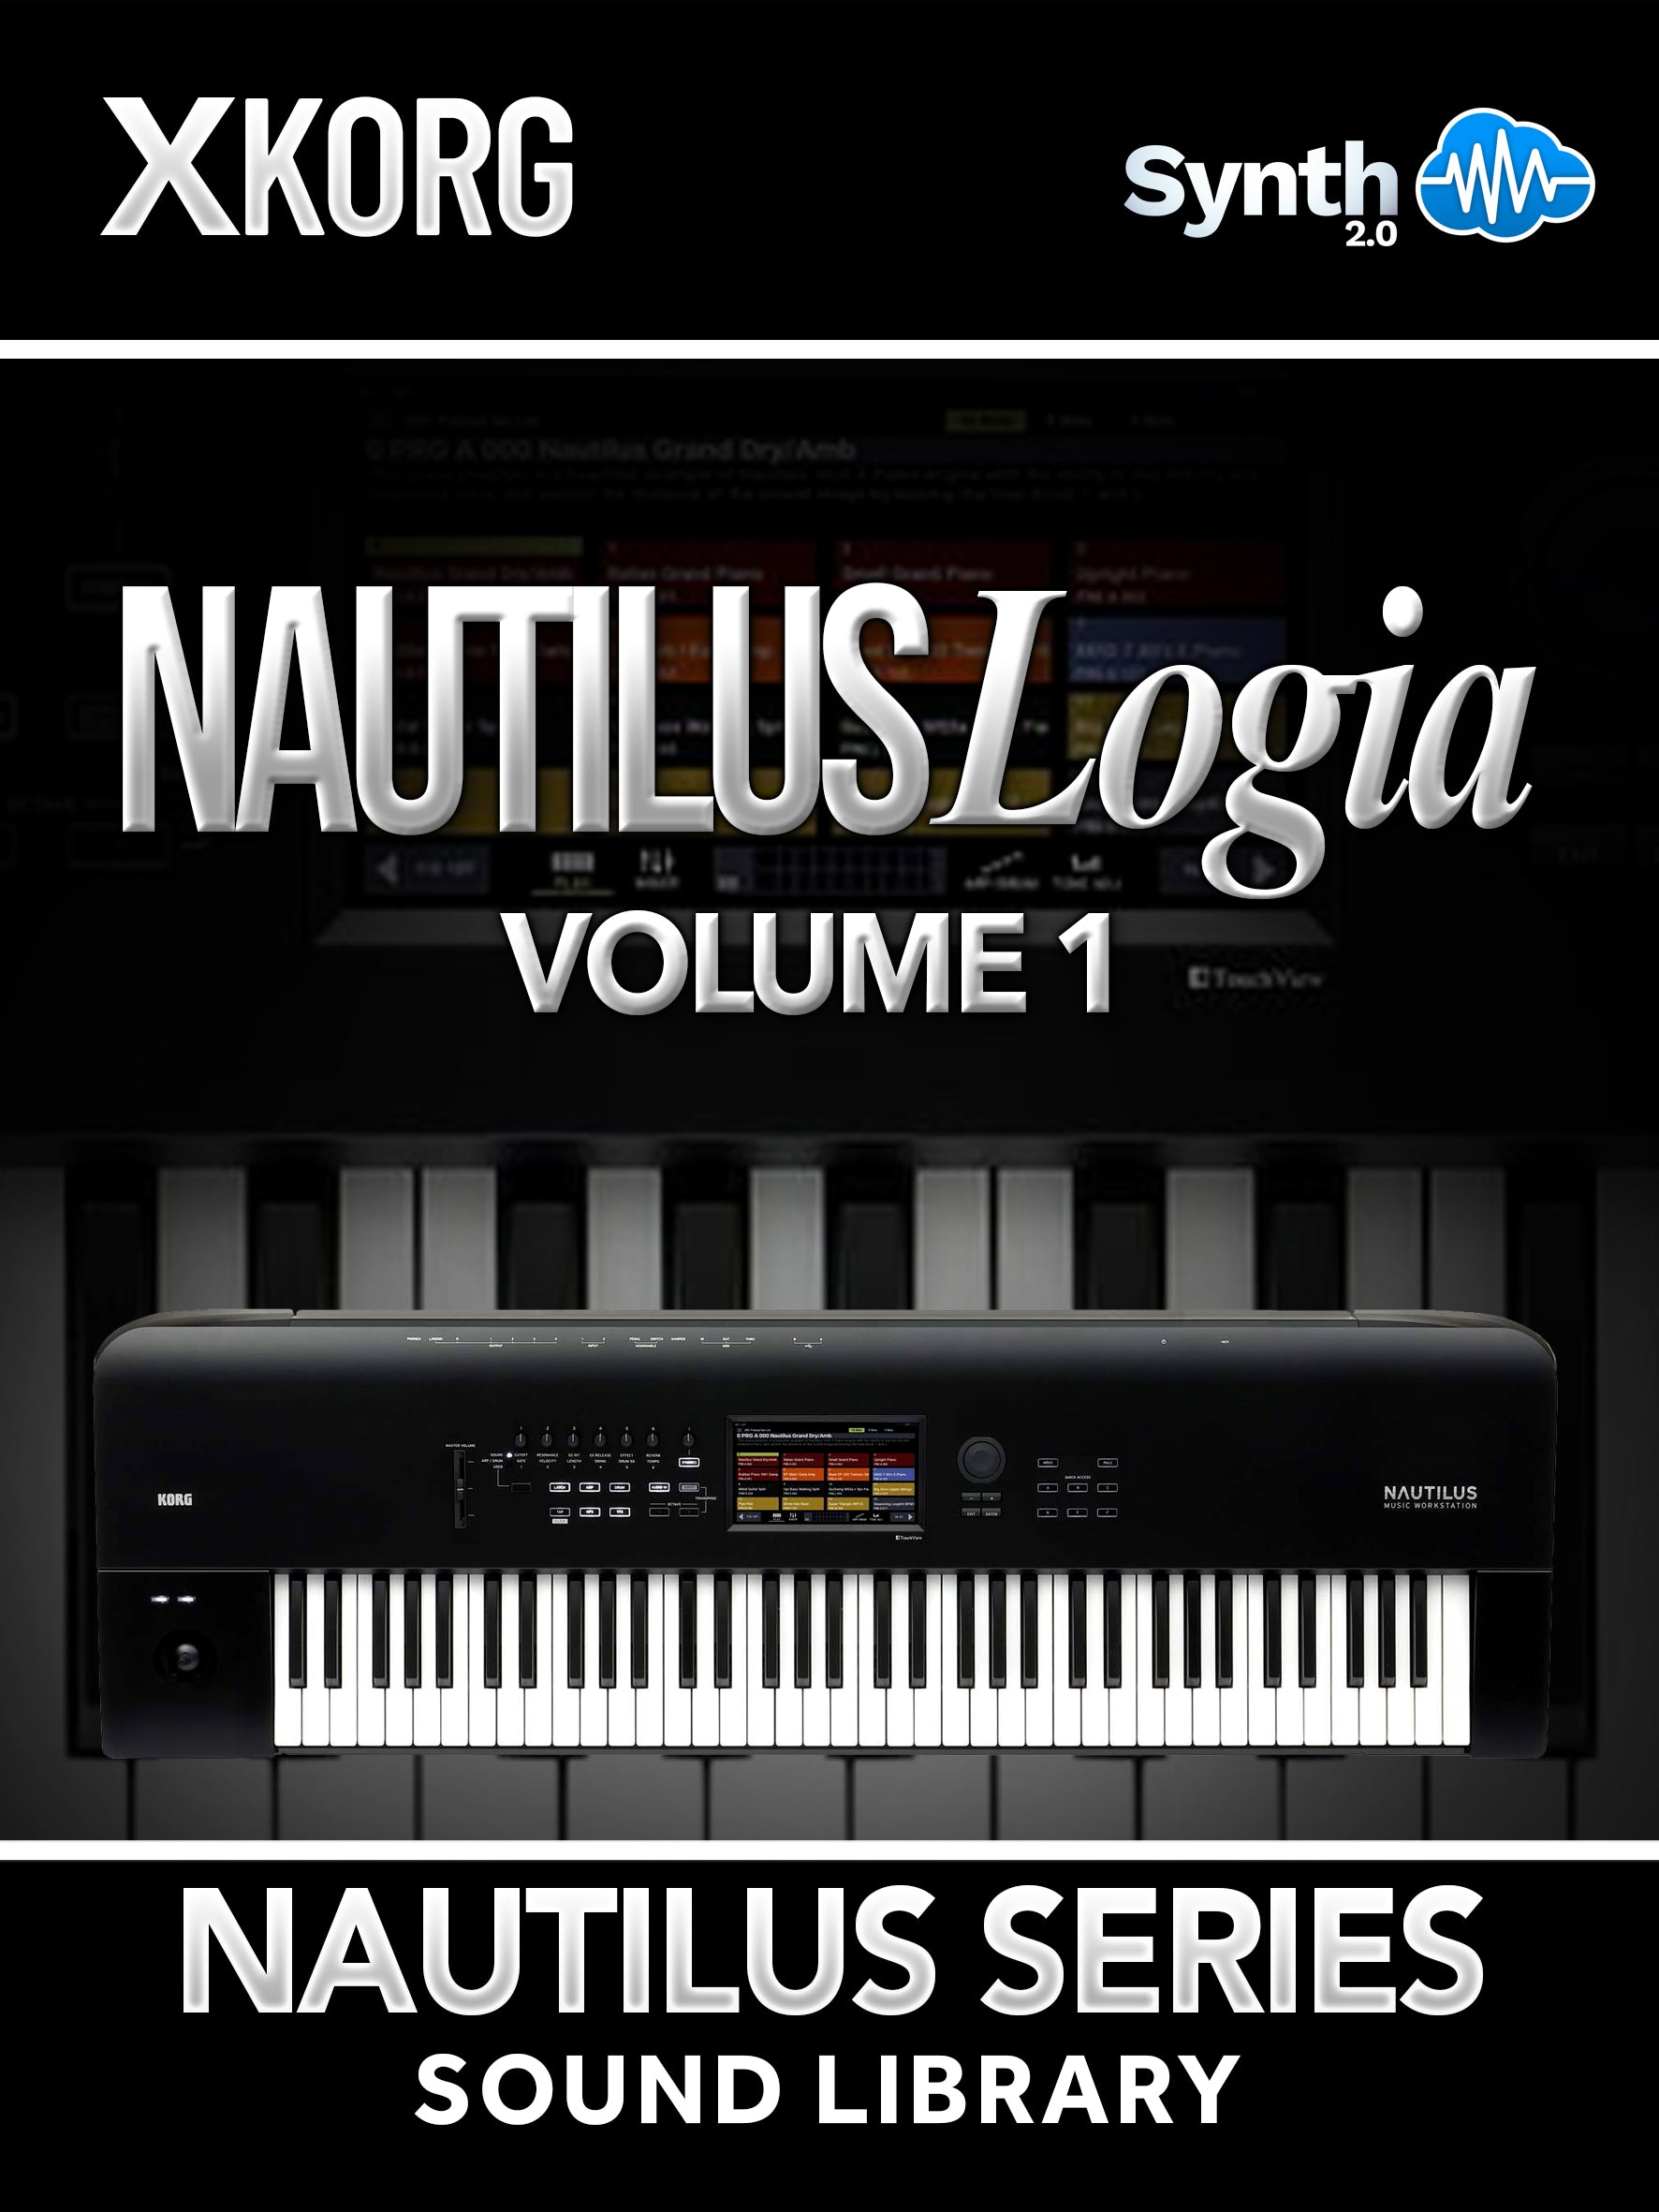 SCL014 - Nautiluslogia V1 - Korg Nautilus Series ( over 512 presets )